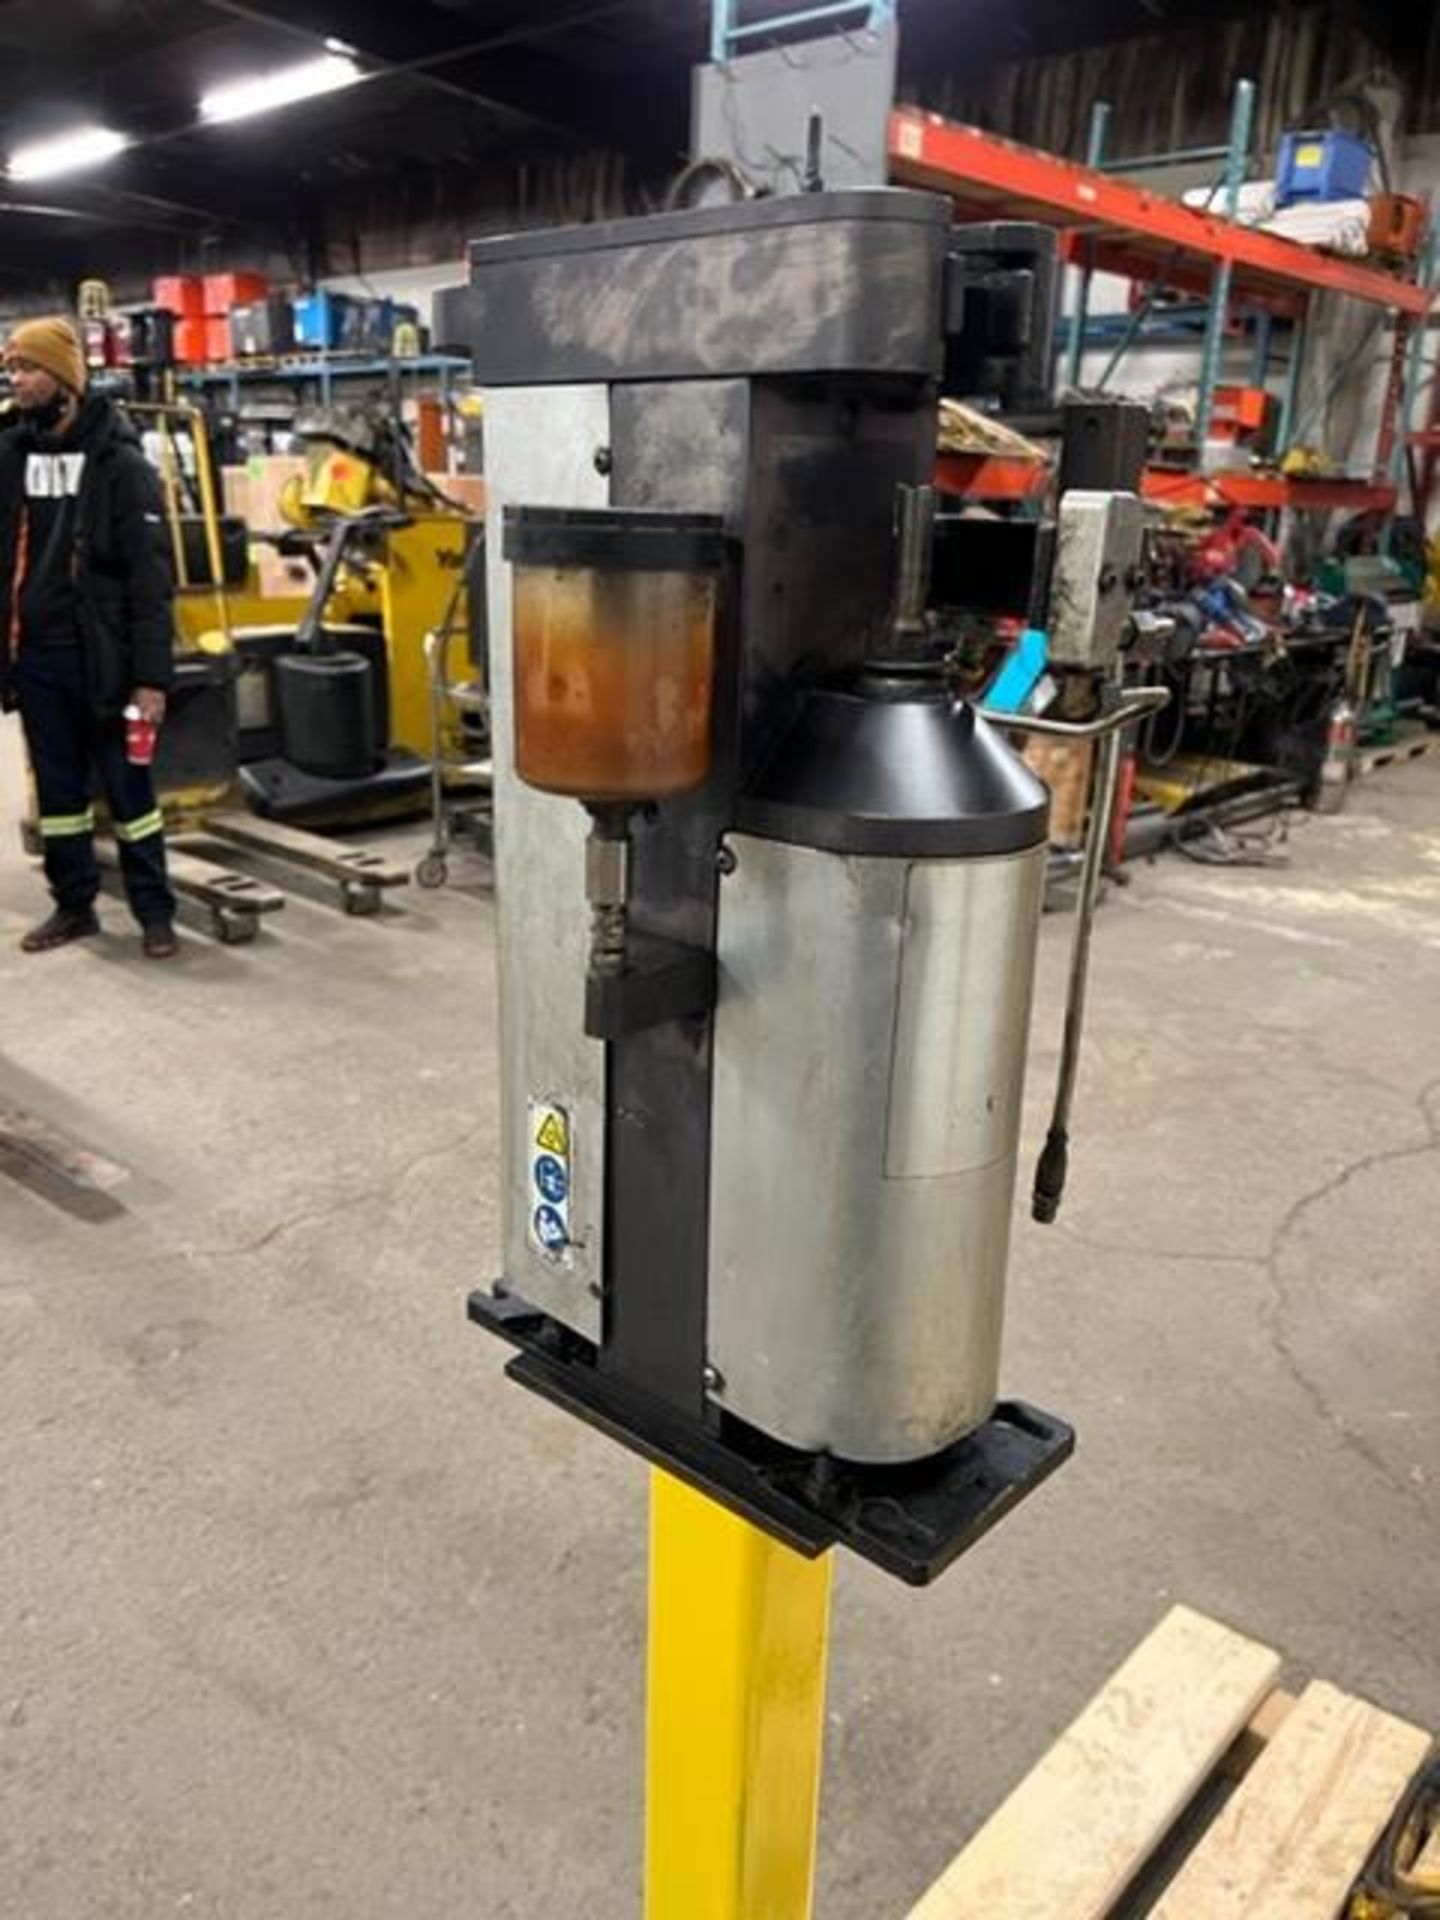 Tregaskiss TT Tough Gun Reamer Robotic Nozzle Torch Cleaning Station for robot welder - Image 2 of 2